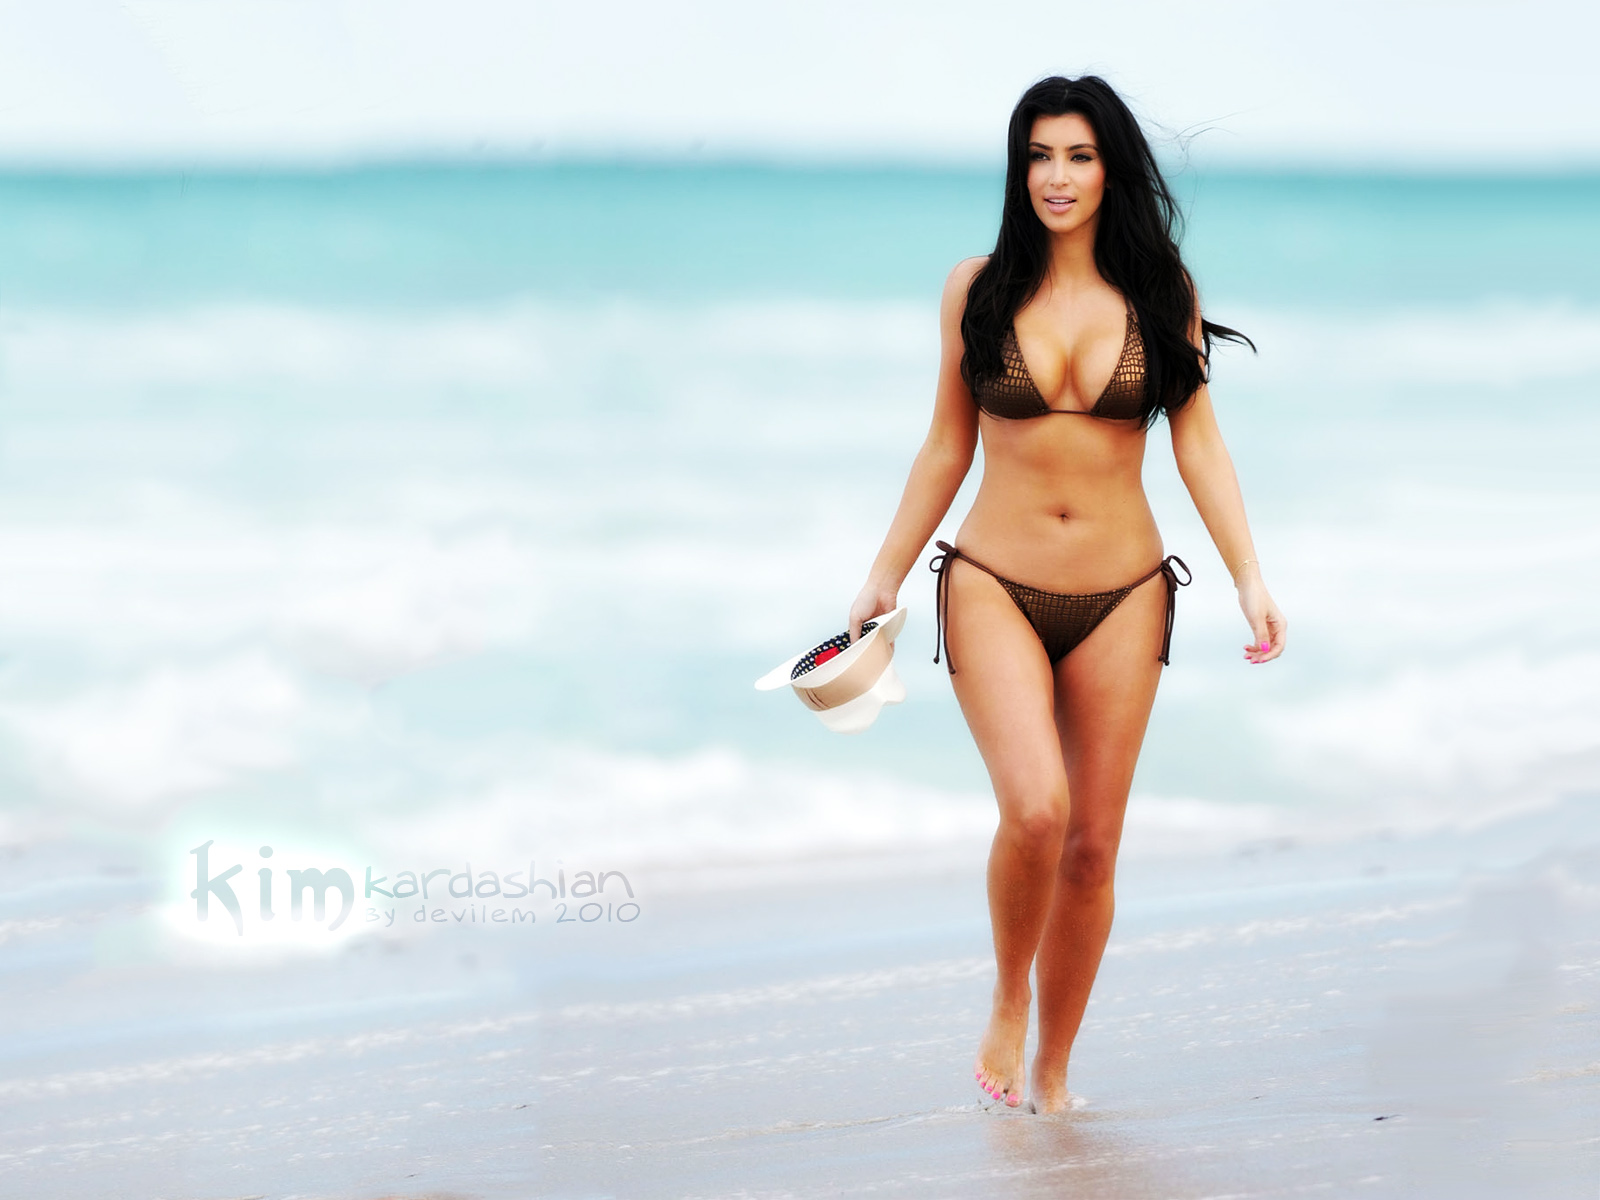 Kim Kardashian Wallpaper High Resolution And Quality